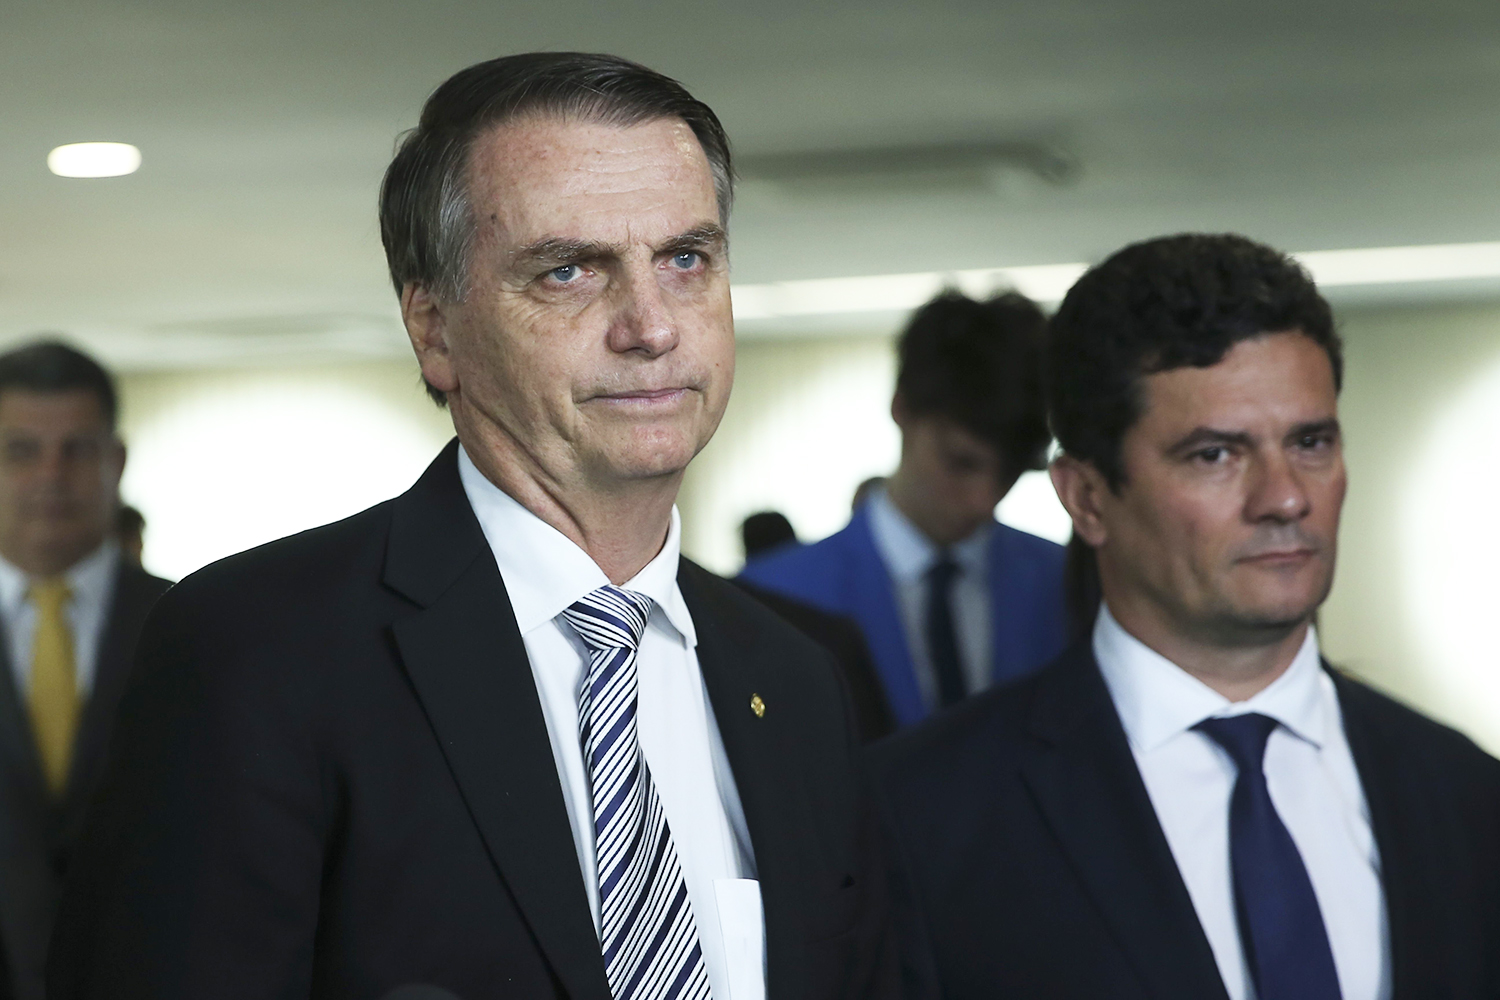 Jair Bolsonaro e Sérgio Moro.